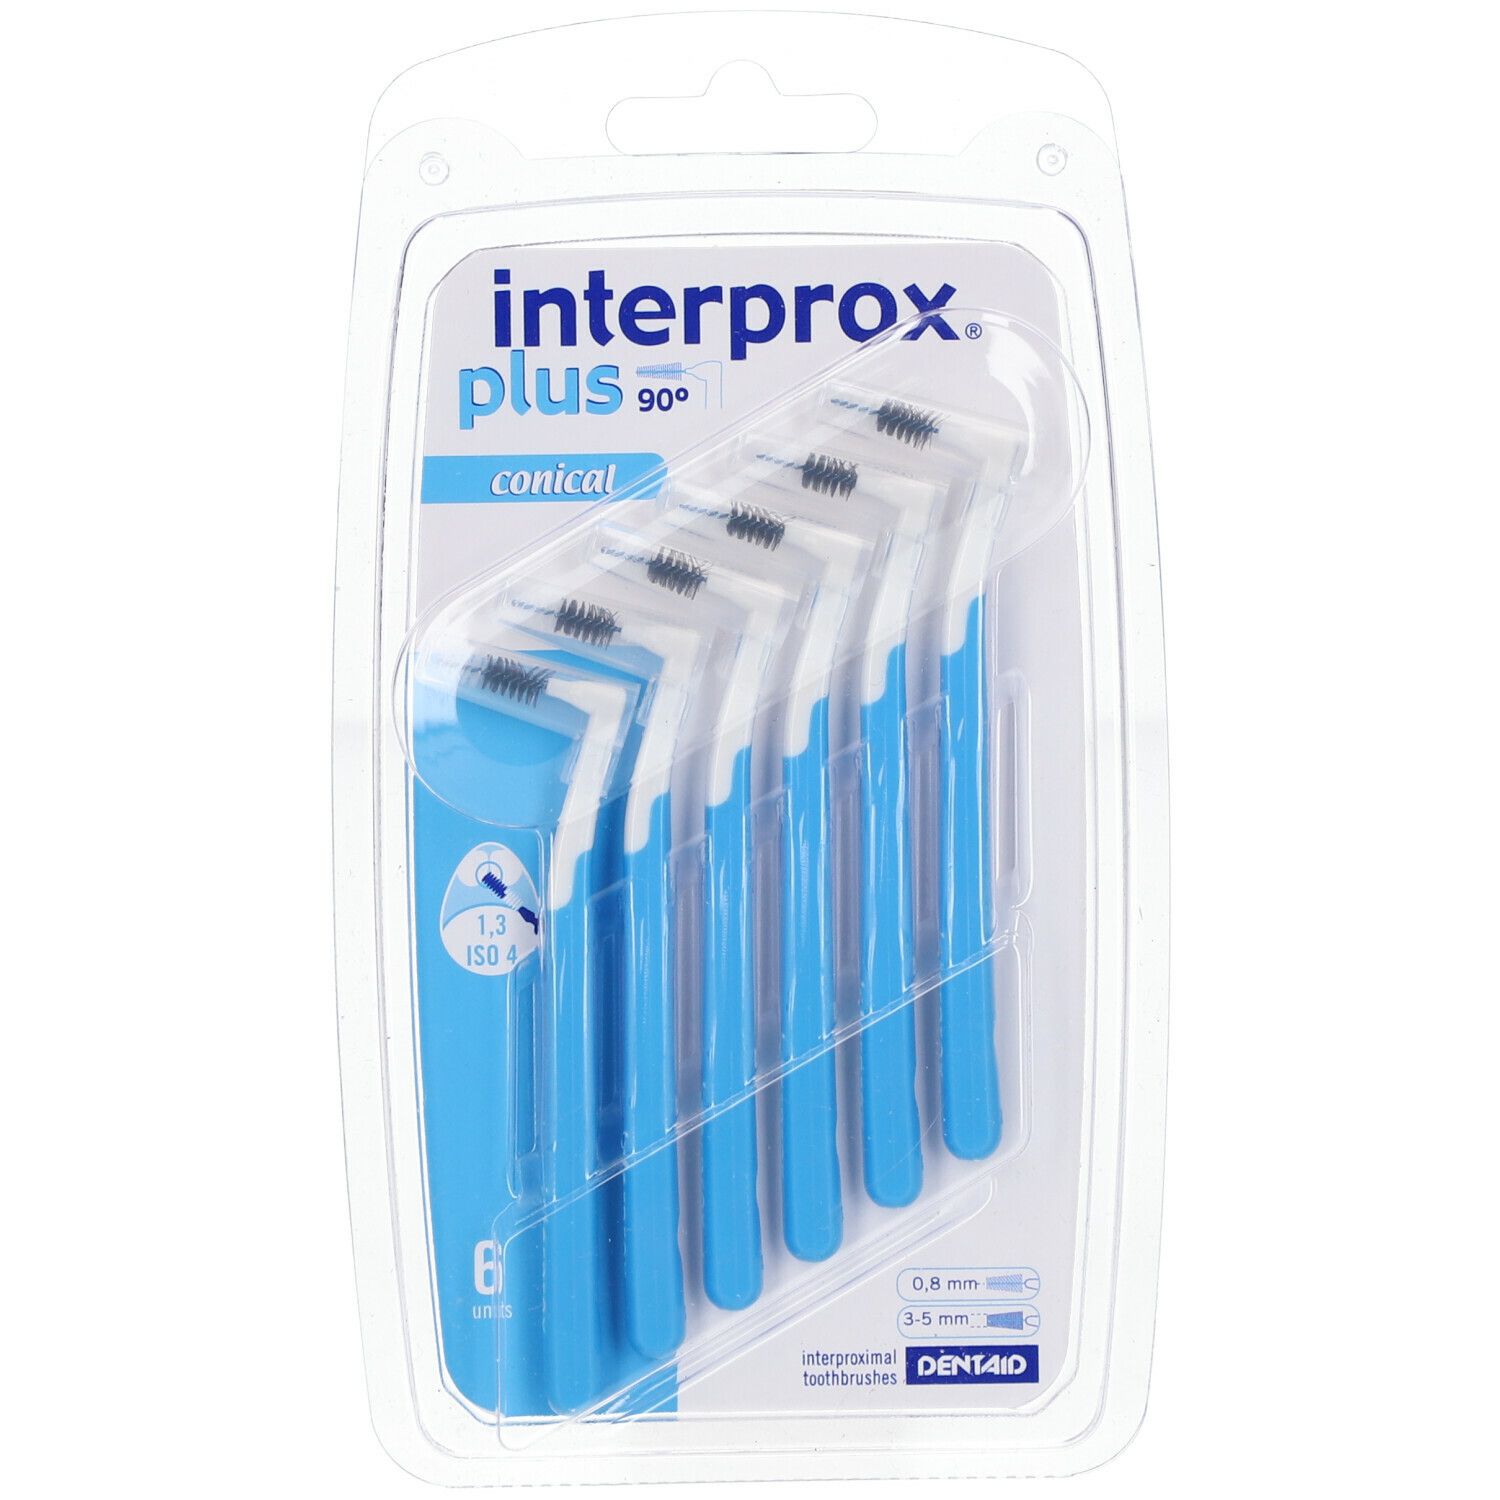 Interprox® Plus conical